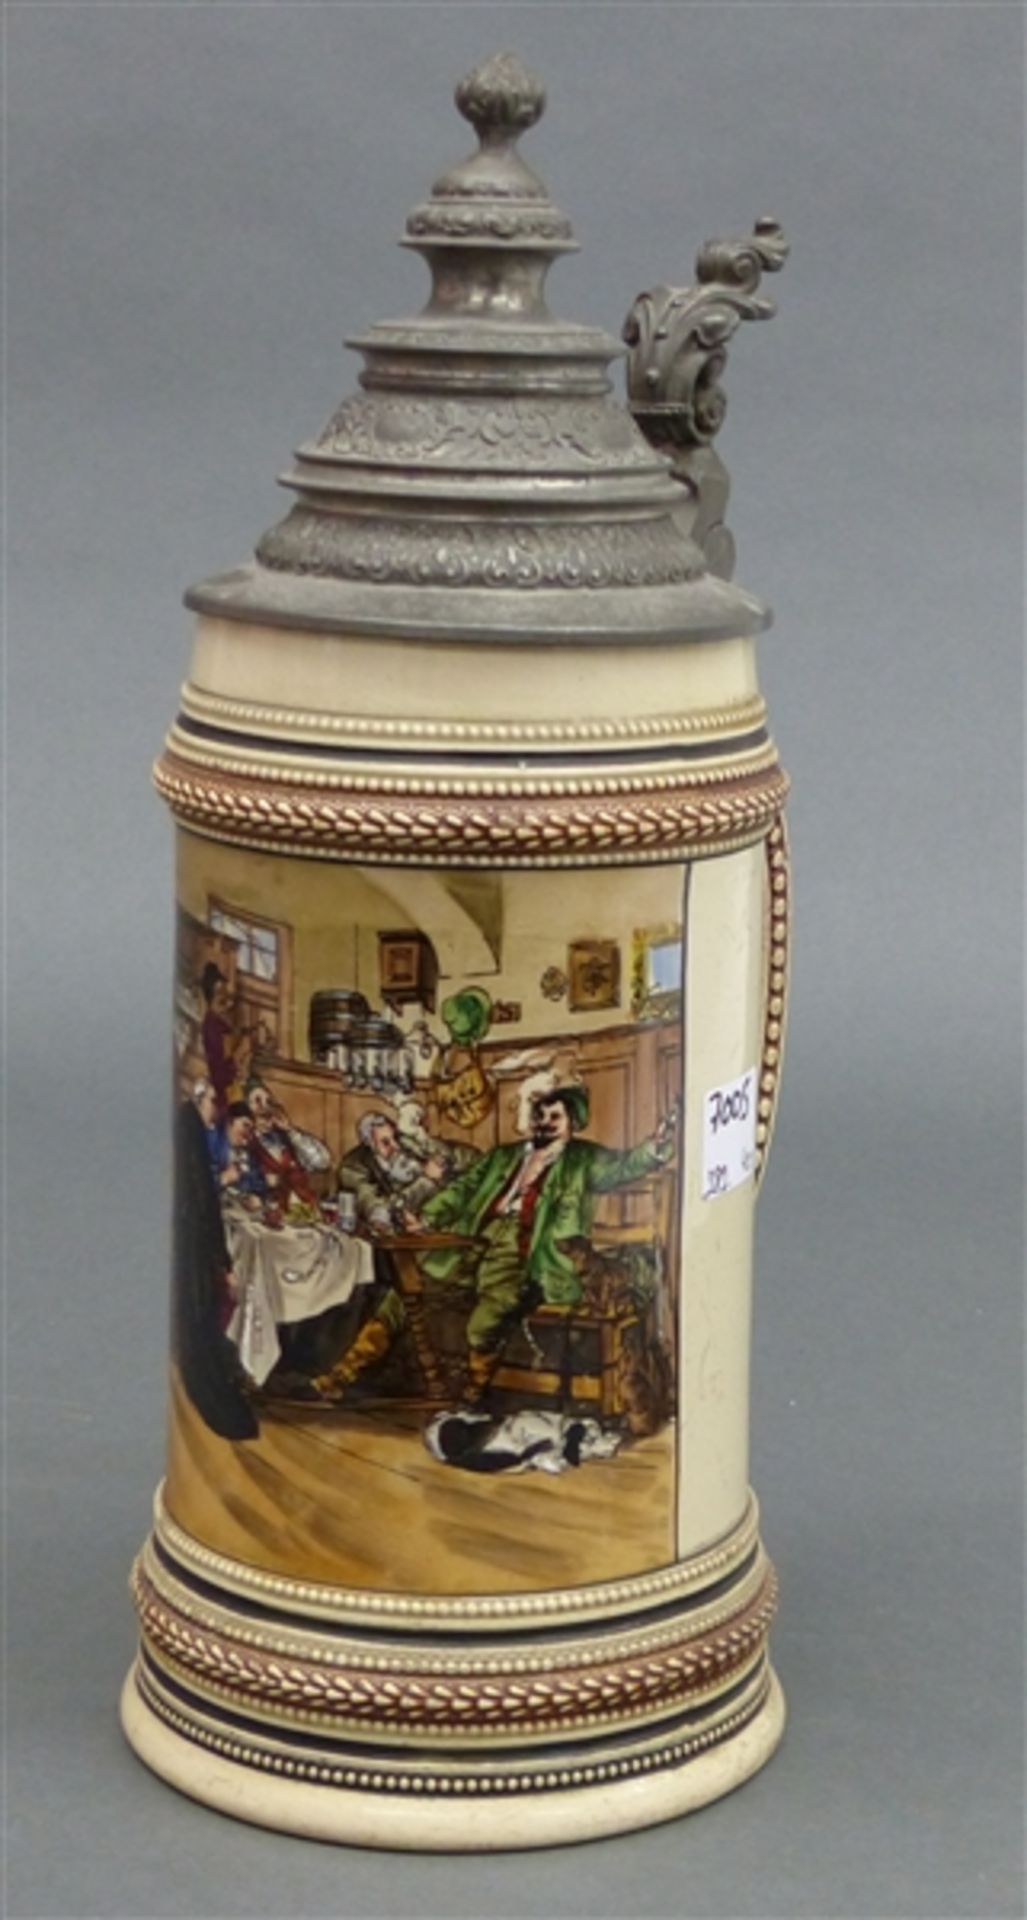 Bierkrug Keramik, um 1900, Zinndeckel, 1 ltr., Defreggermotiv, h 29 cm,